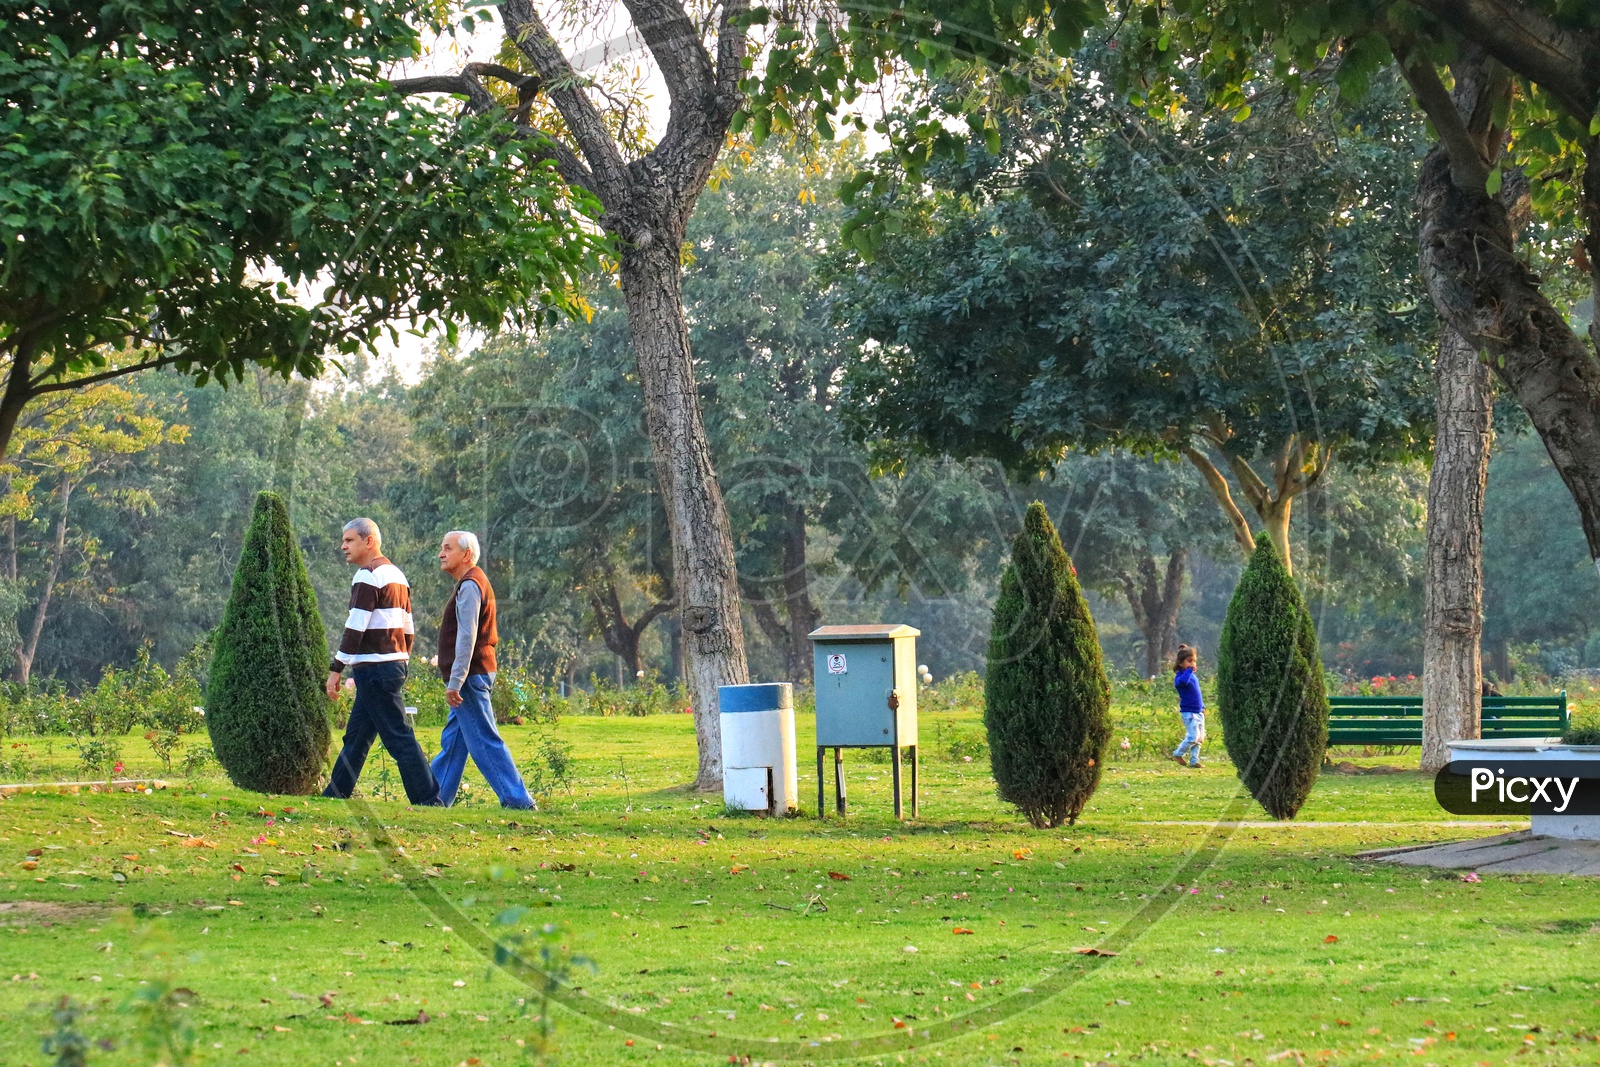 Old men walking in the park